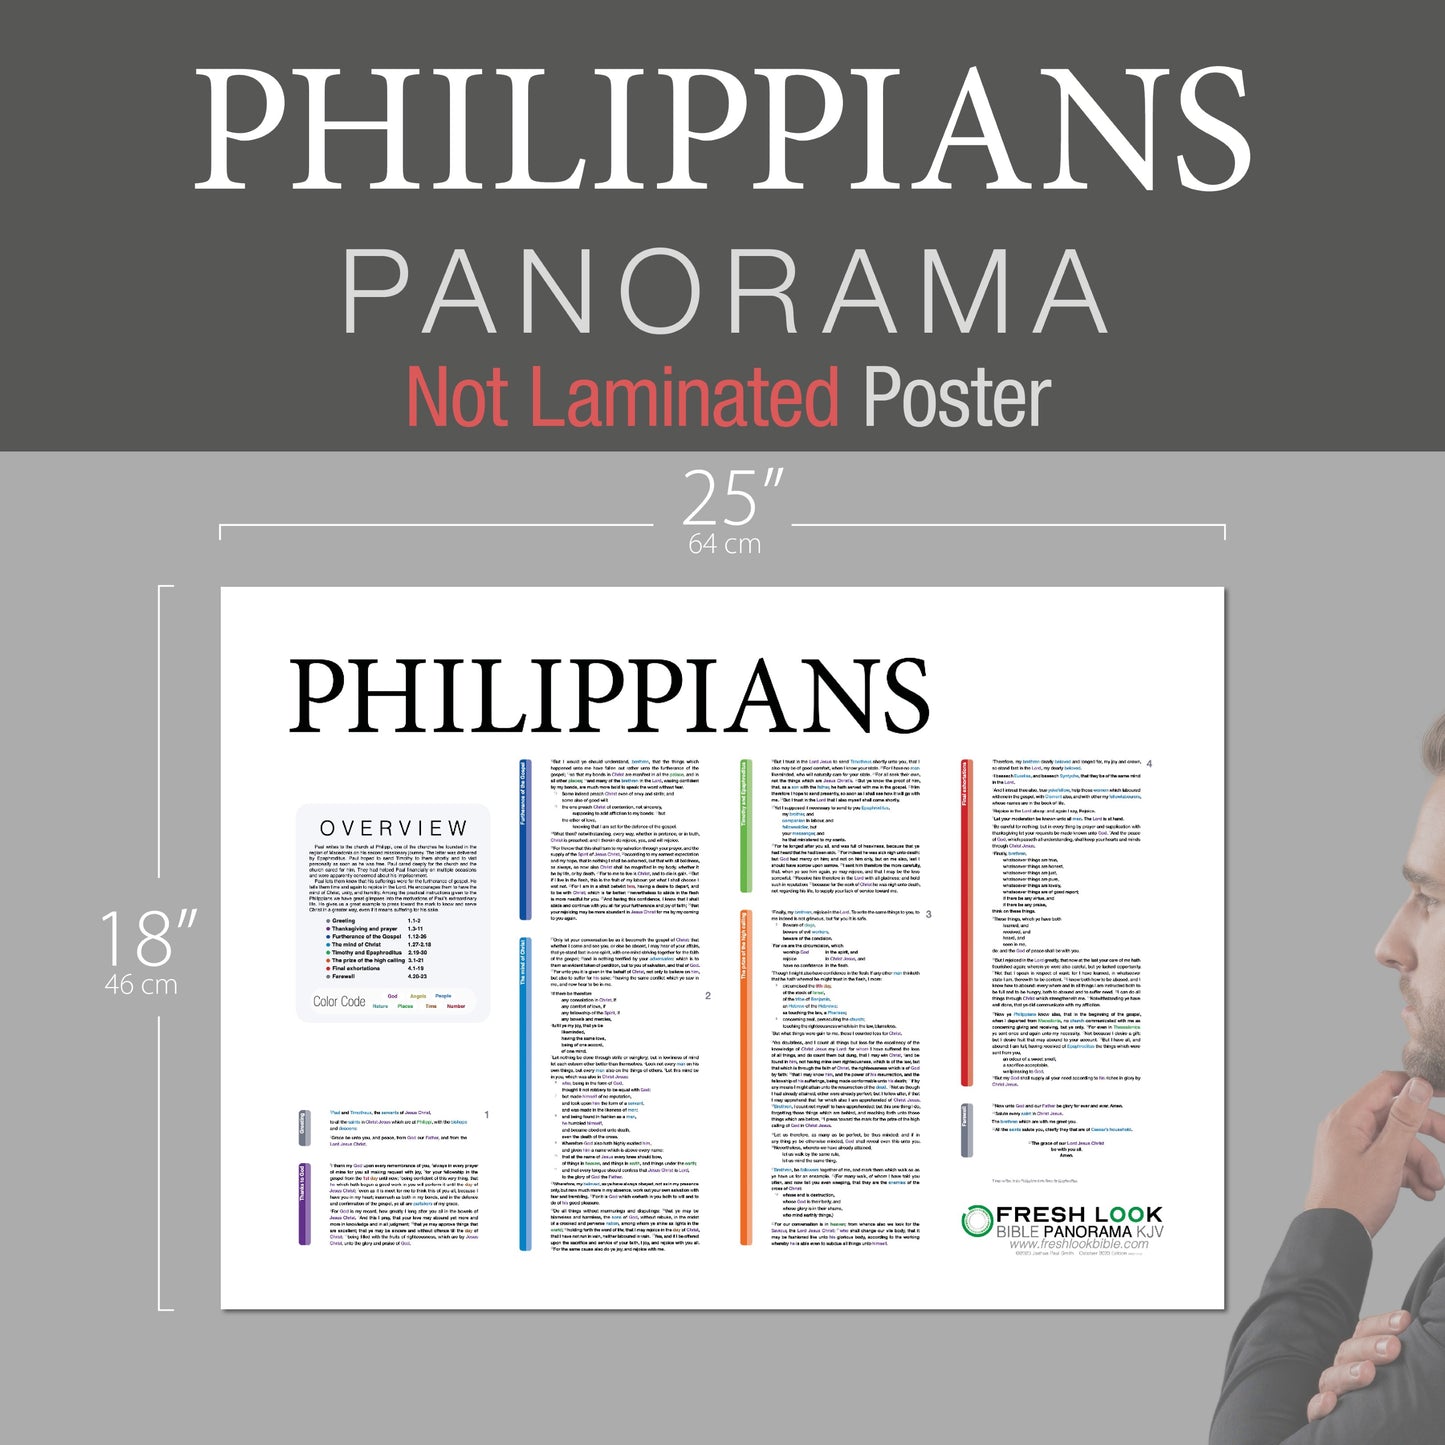 Philippians Panorama Not Laminated